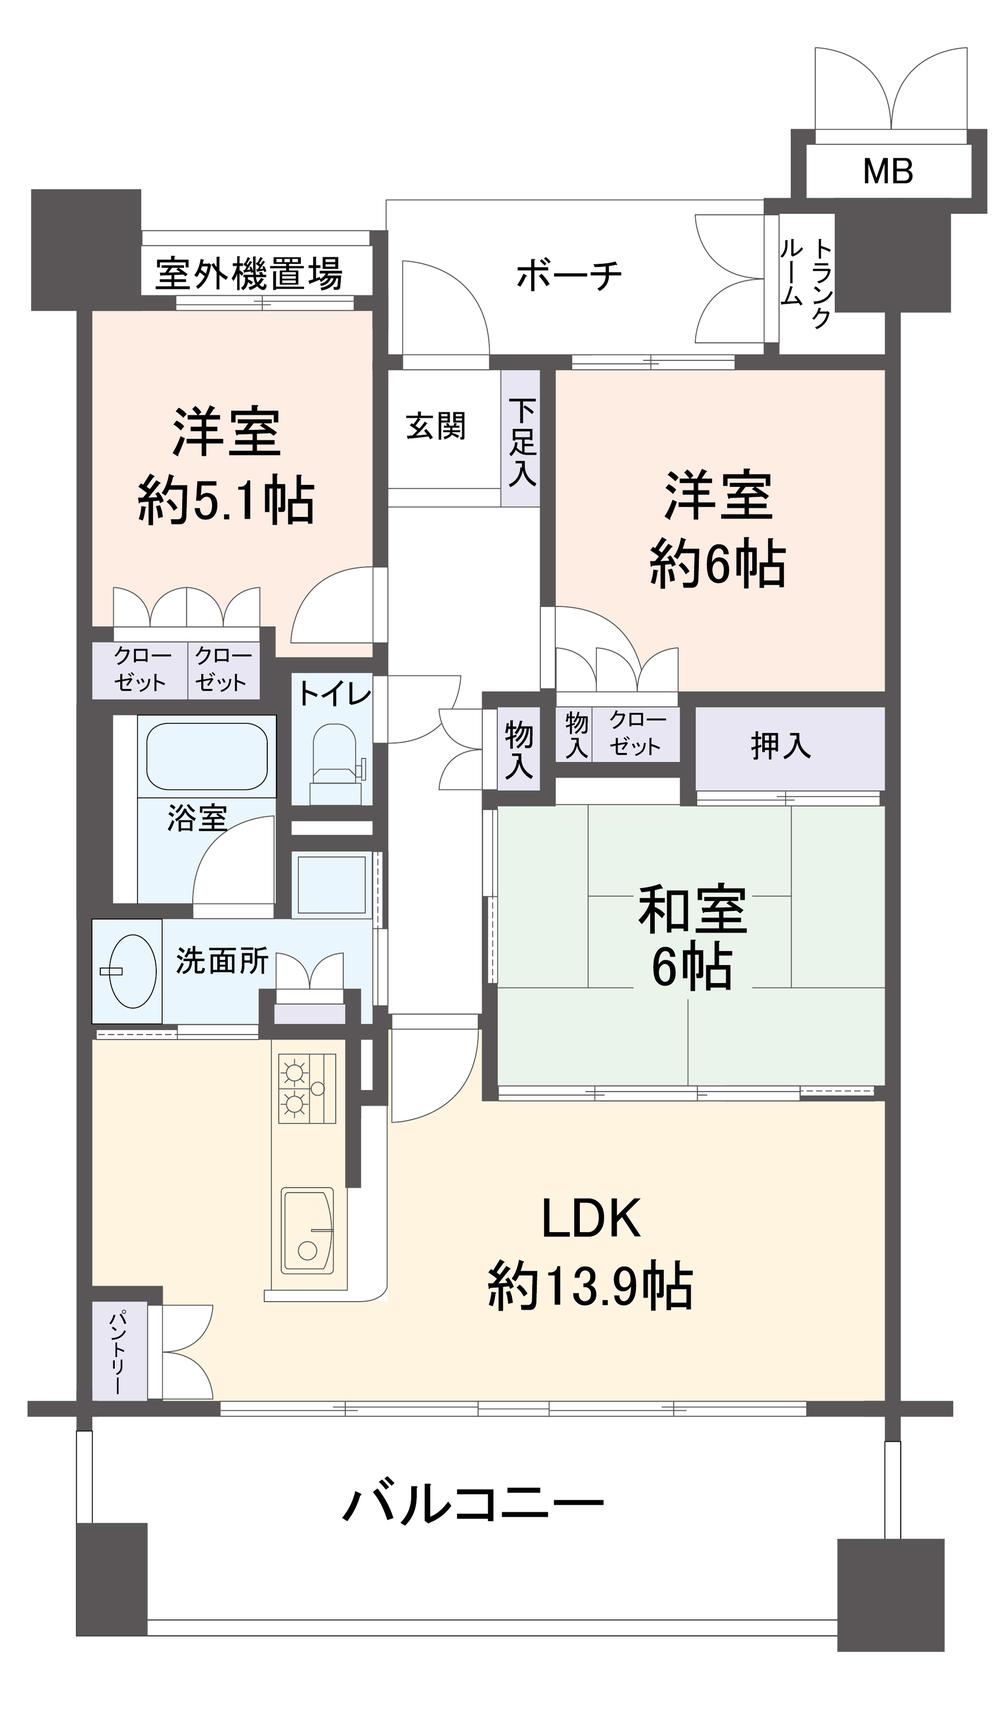 Floor plan. 3LDK, Price 27,800,000 yen, Occupied area 72.81 sq m , Balcony area 14.4 sq m